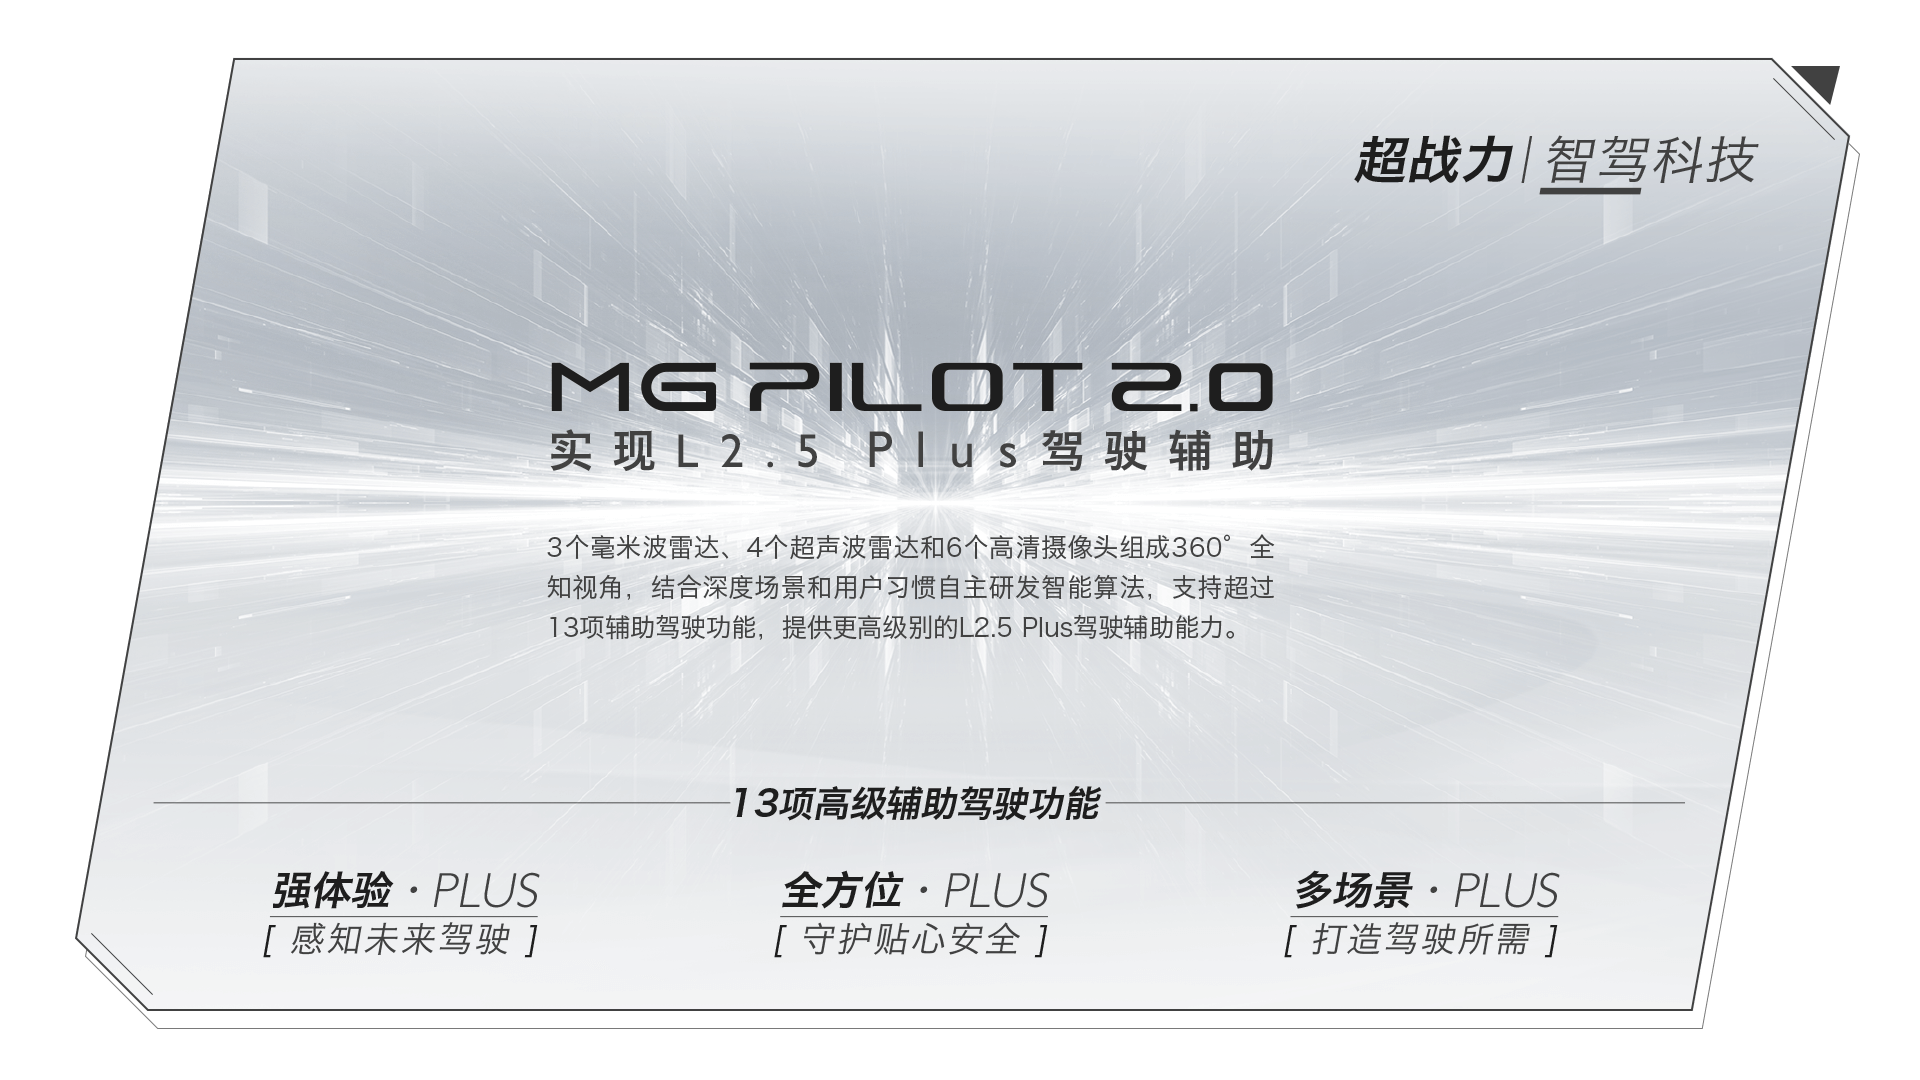 MG PILOT 2.0实现L2.5Plus驾驶辅助